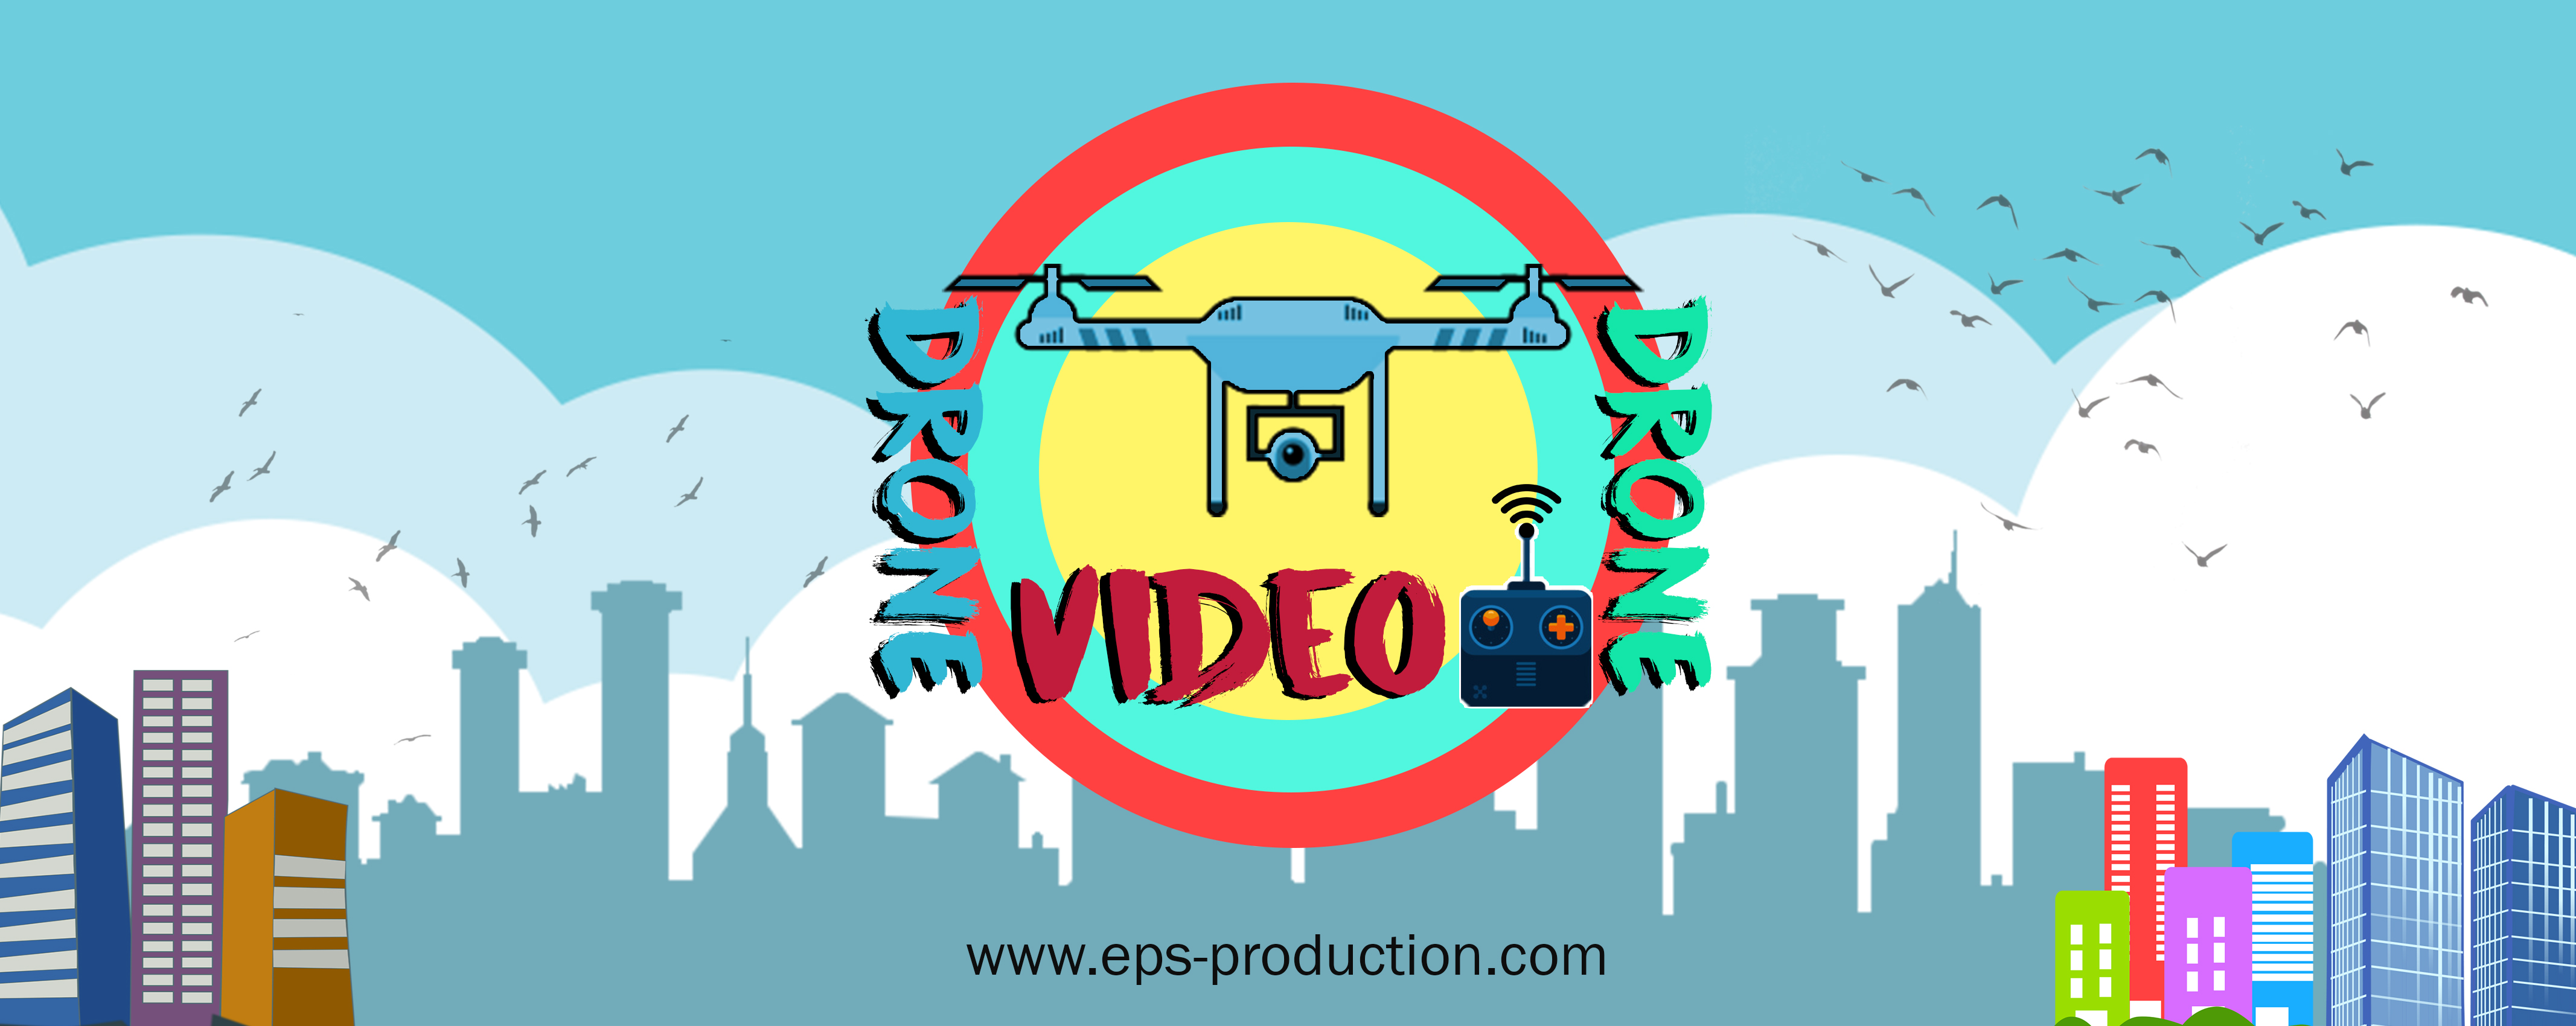 Jasa Video Drone - Jasa Video eps-production.com